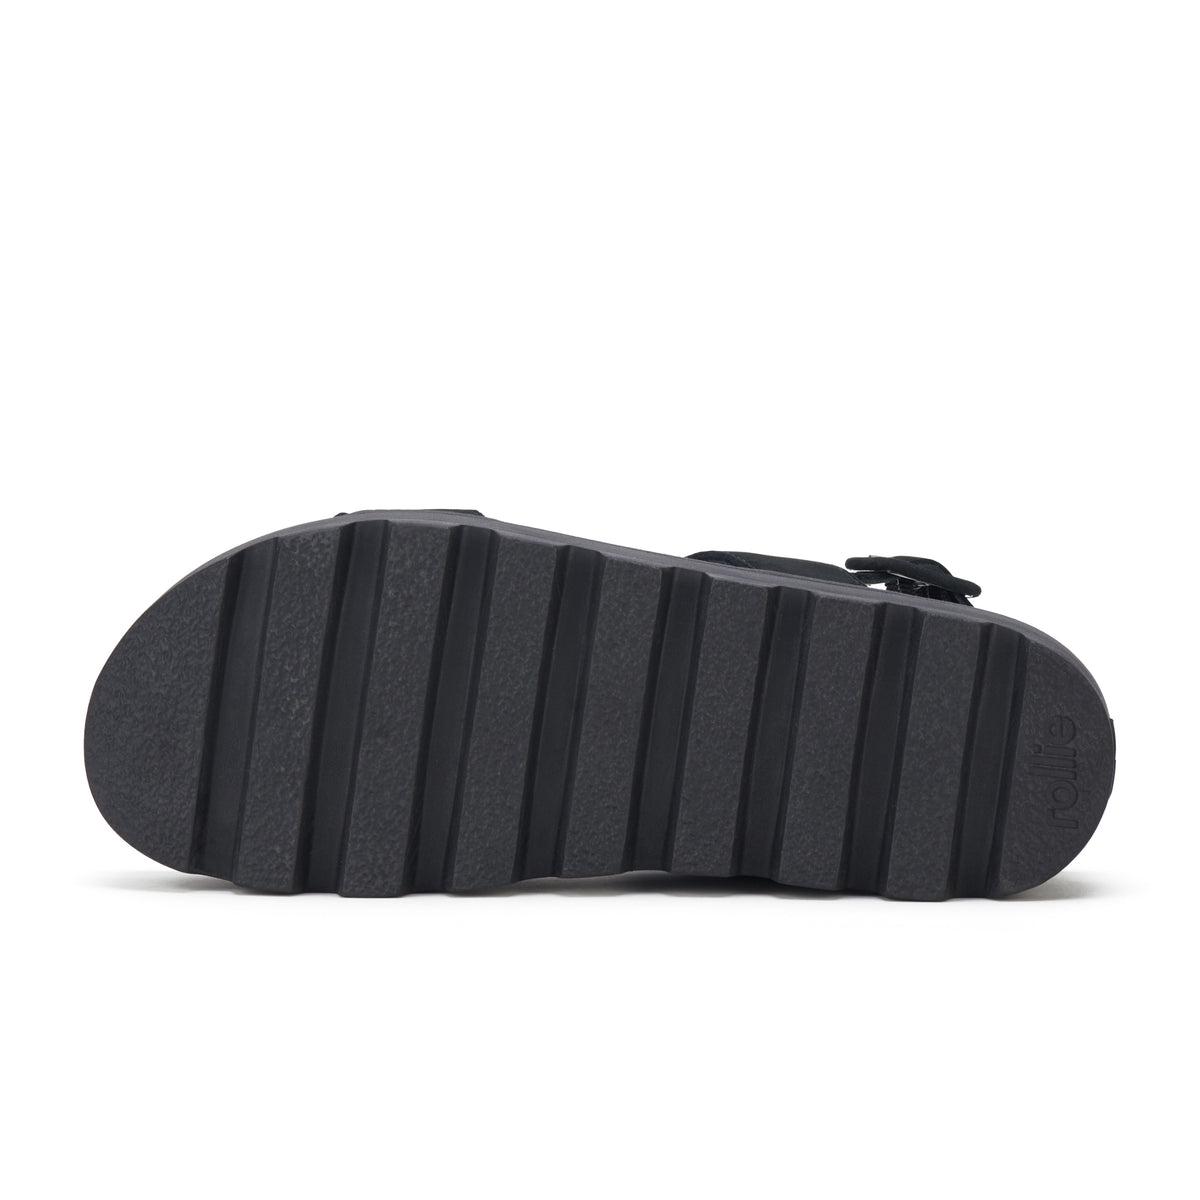 Zeze Wedge Strap All Black-Footwear-Rollie-The Bay Room